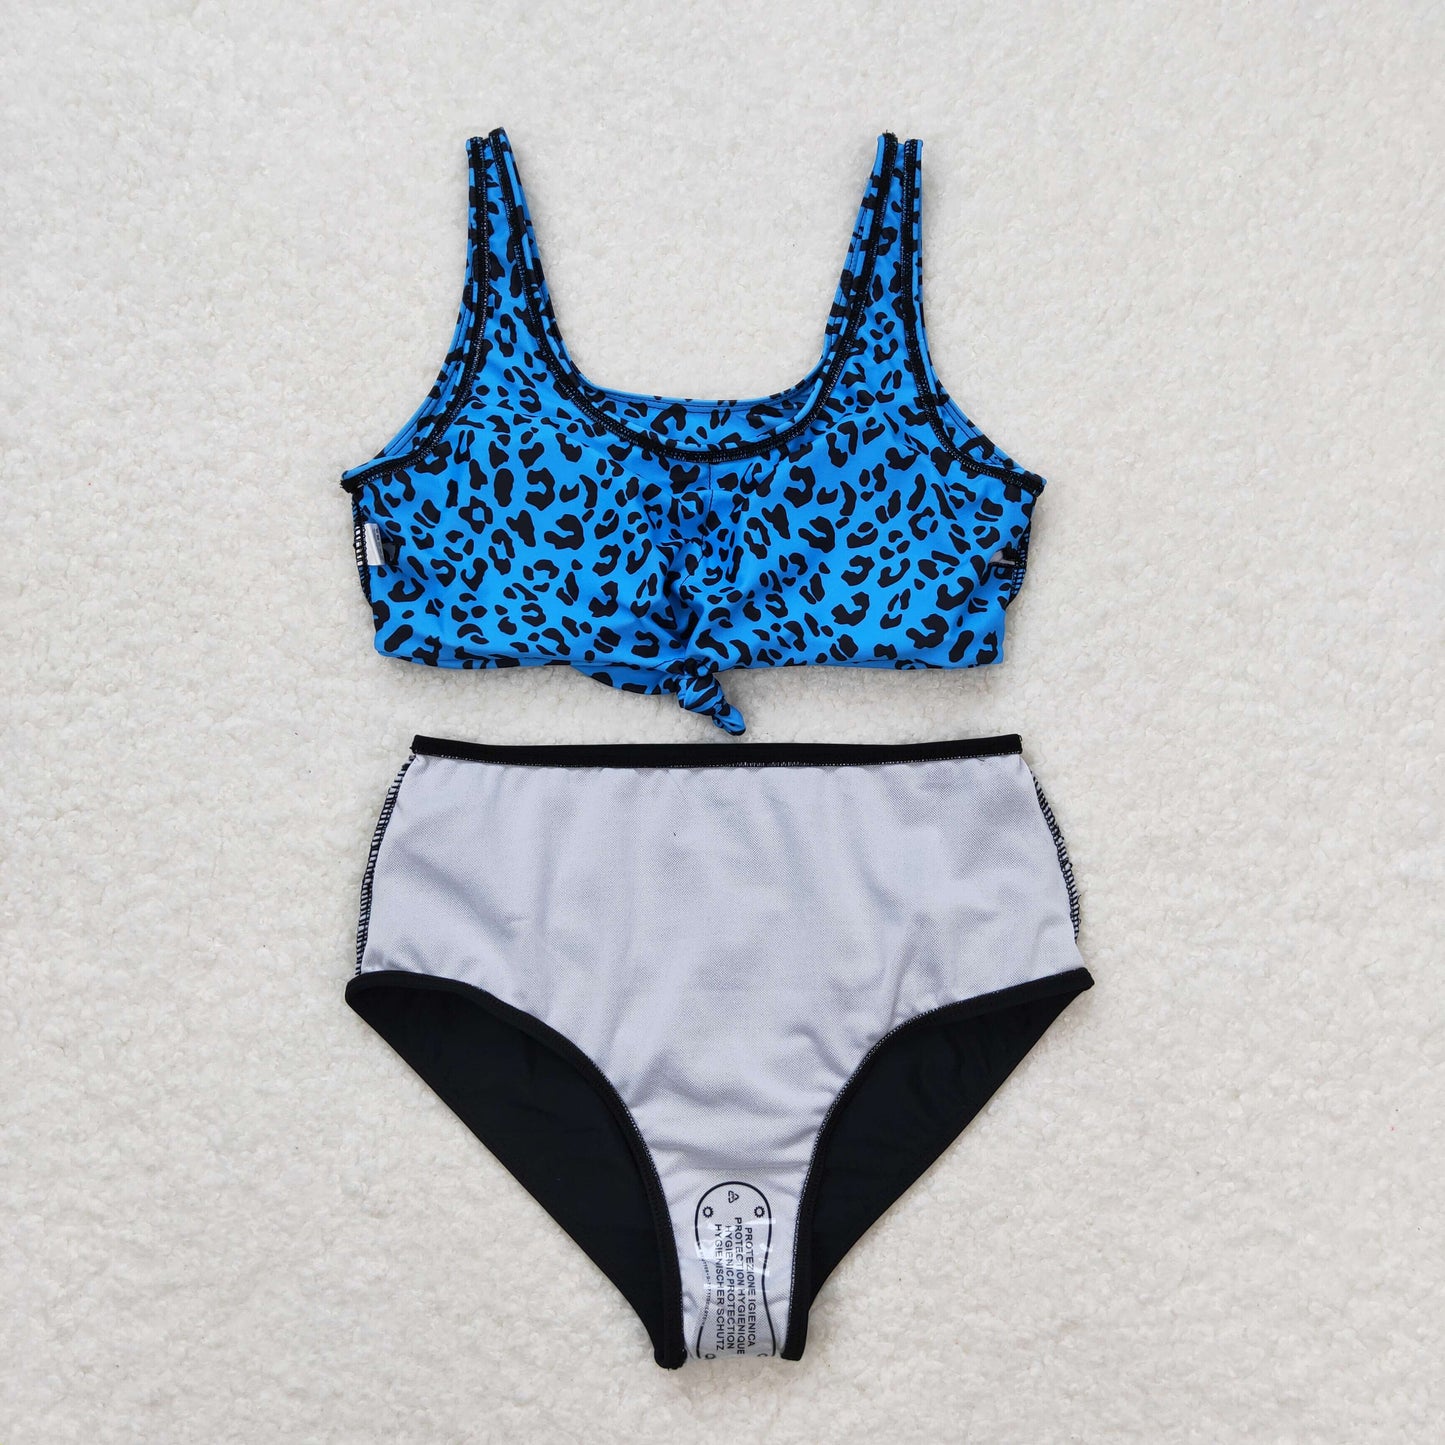 S0290 Adult leopard print blue and black swimsuit set